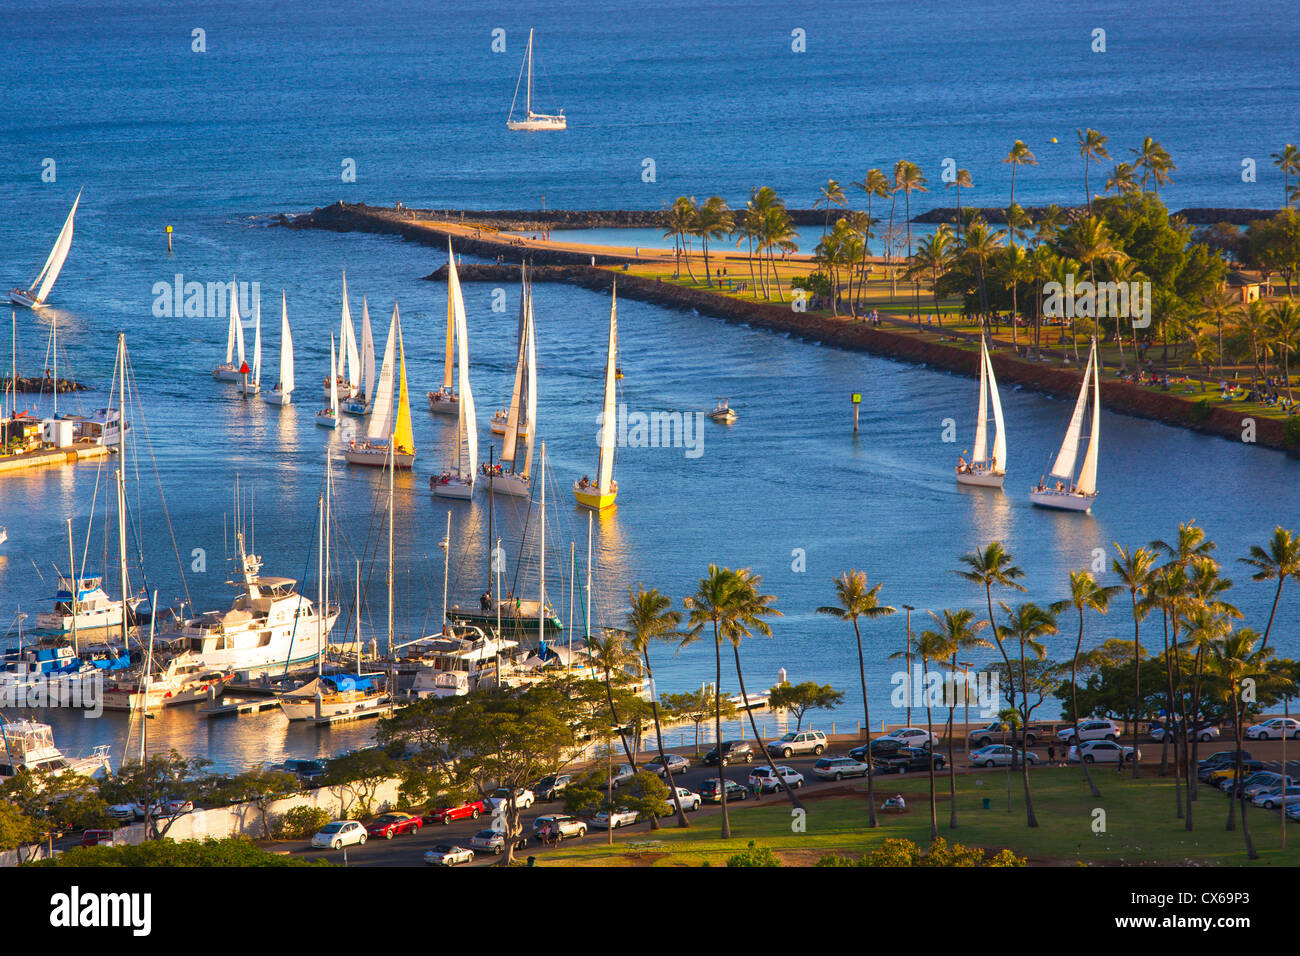 Ala Wai Yacht Harbor, Waikiki, Oahu, Hawaii Foto Stock